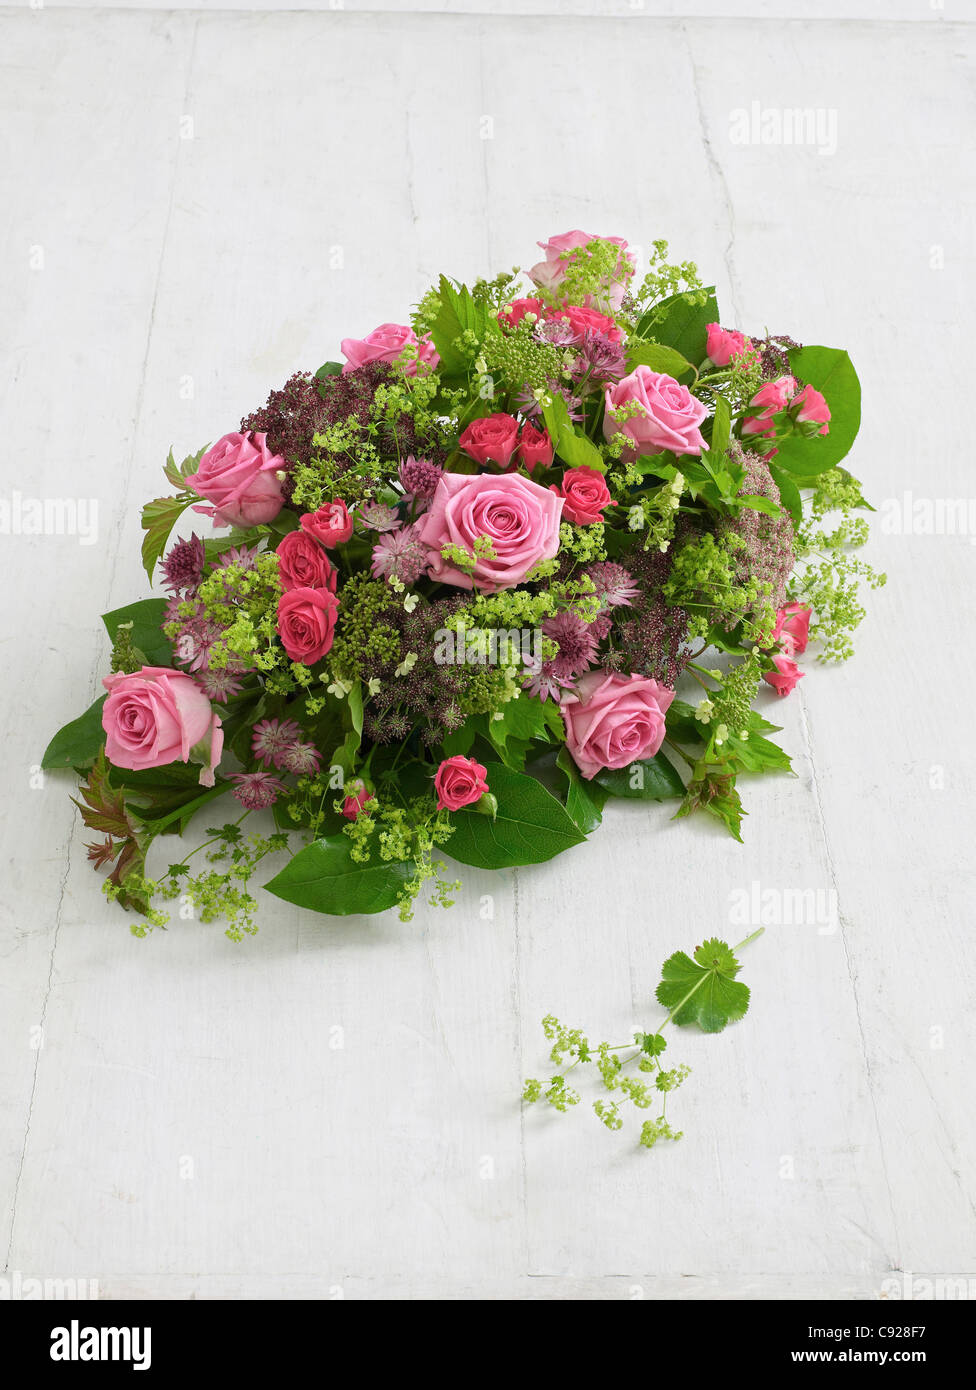 Flower arrangement using flower arranging foam Stock Photo - Alamy